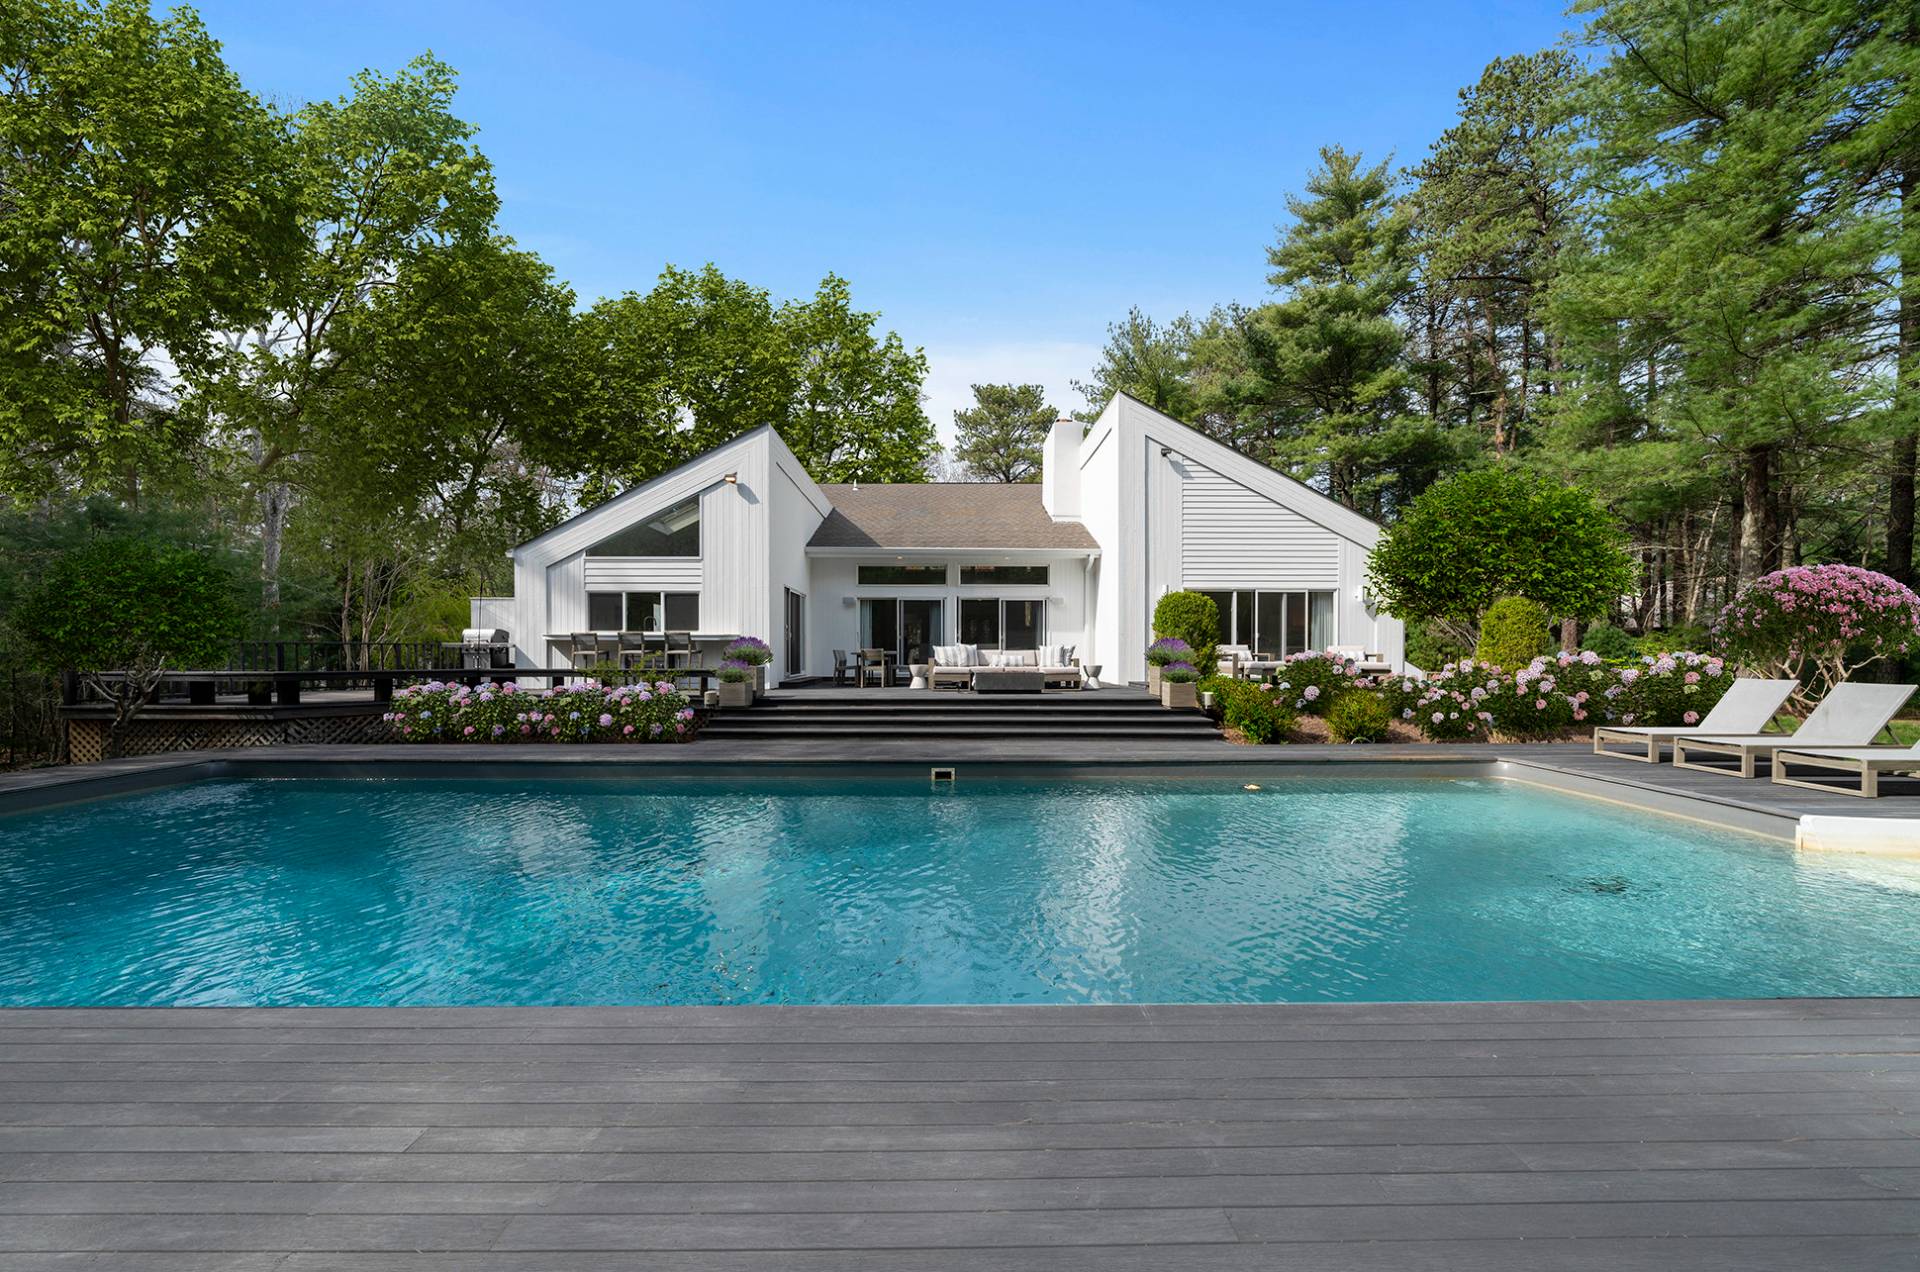 Rental Property at 6 Bull Path, East Hampton, Hamptons, NY - Bedrooms: 6 
Bathrooms: 4  - $70,000 MO.